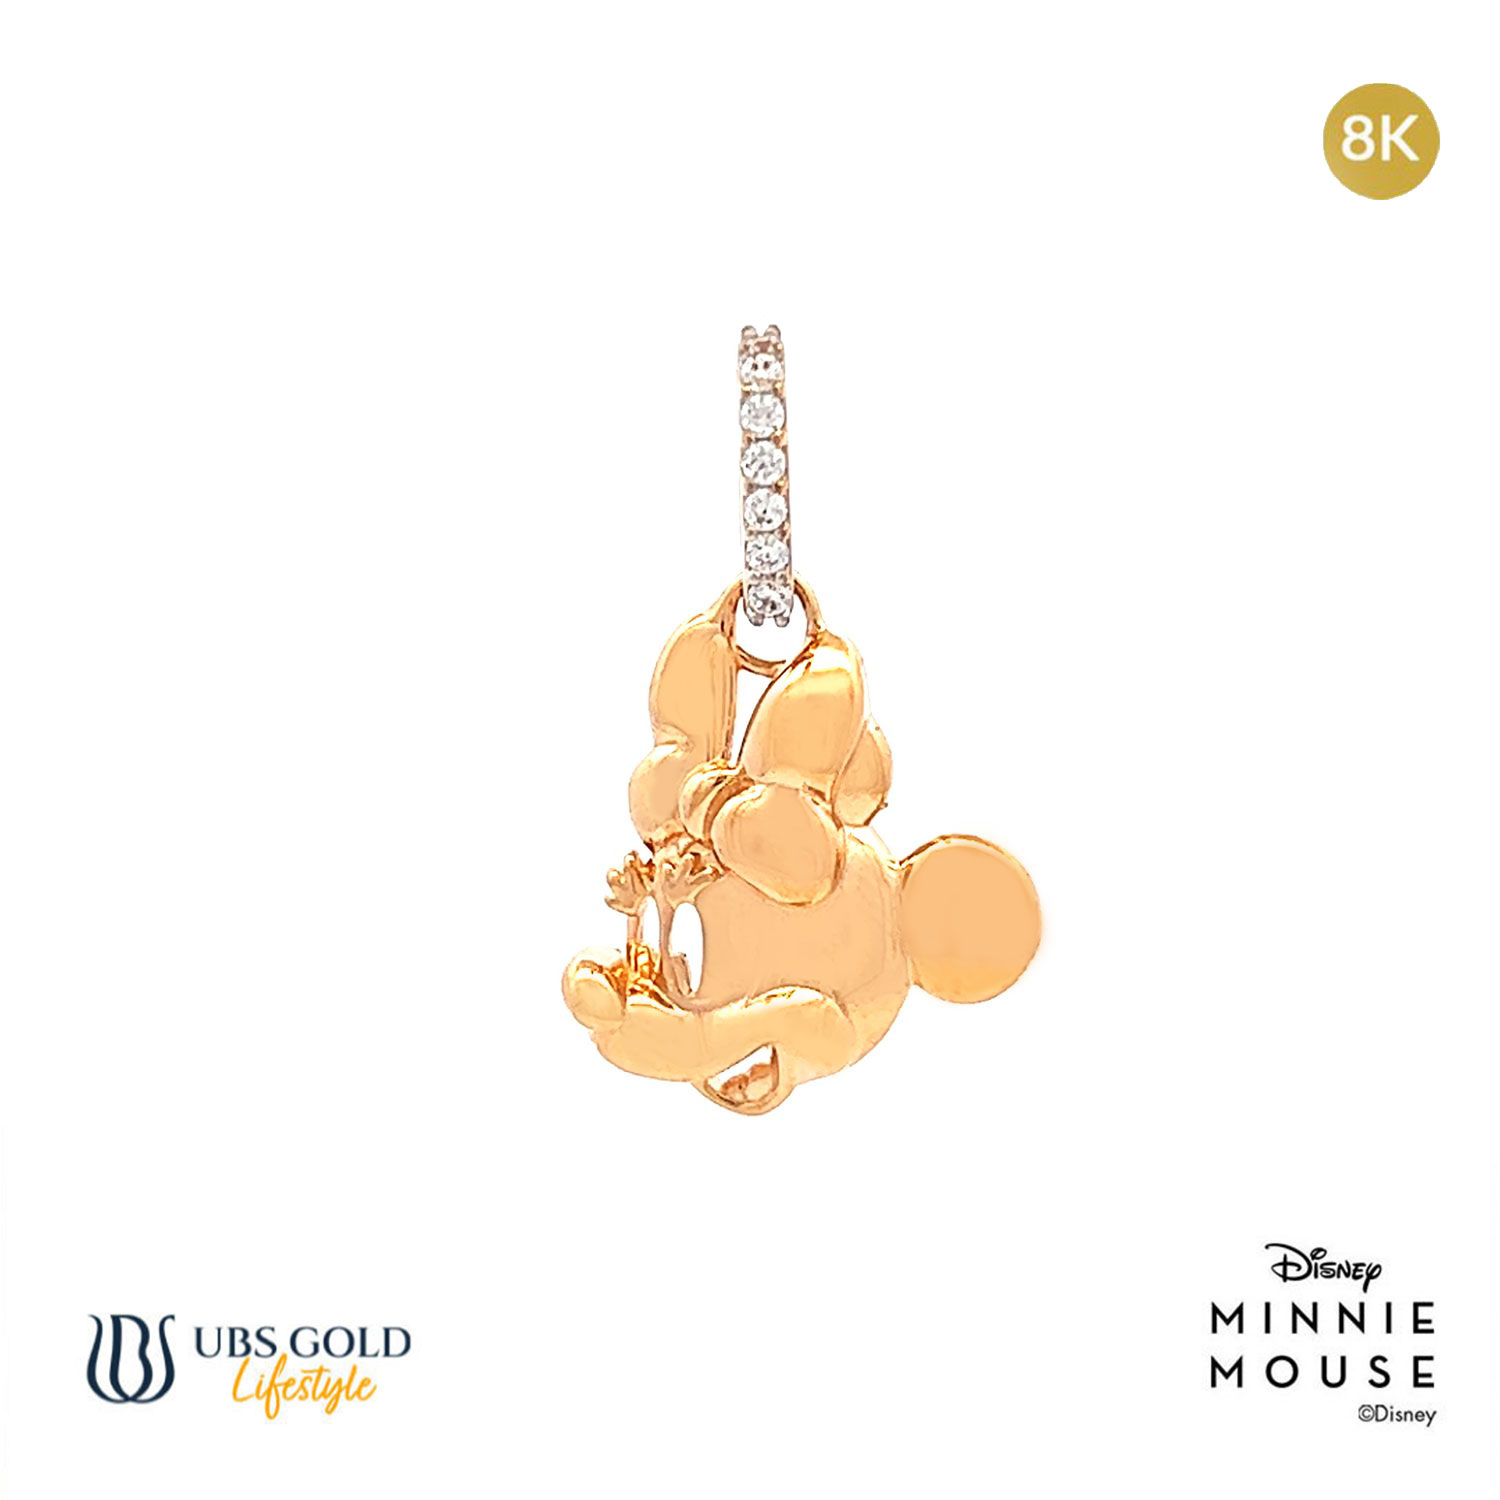 UBS Liontin Emas Disney Minnie Mouse - Cly0011K - 8K